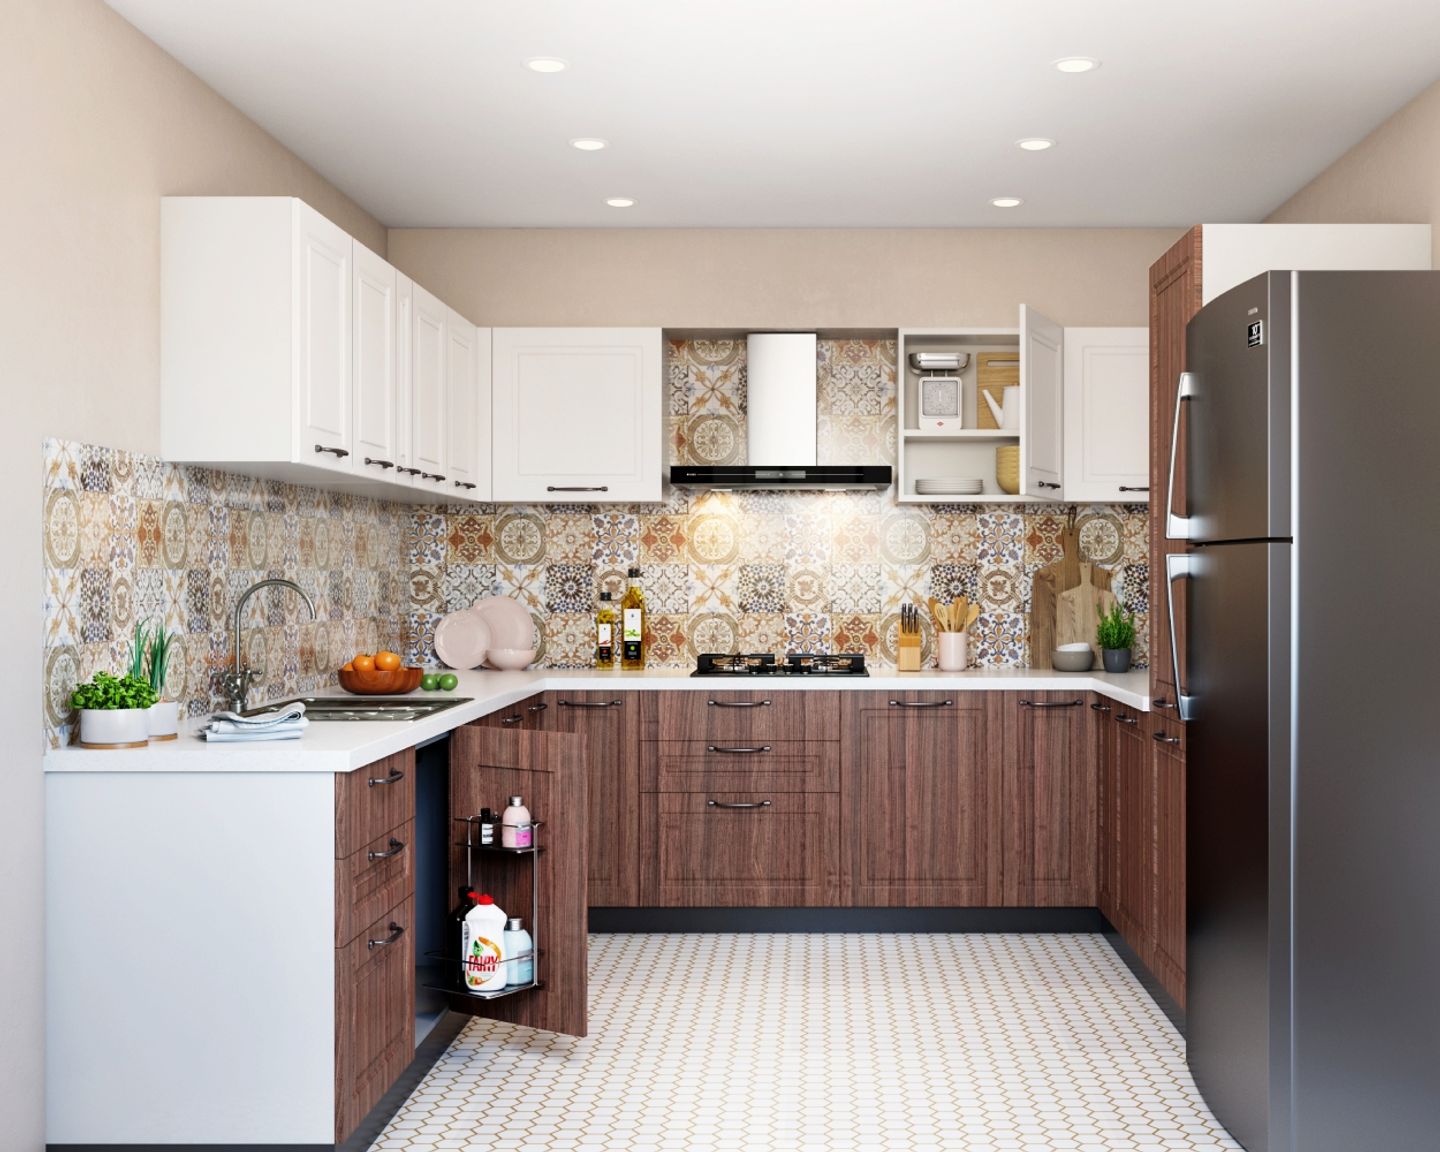 U Shape Kitchen Design With Colourful Patterned Dado Tiles - Livspace